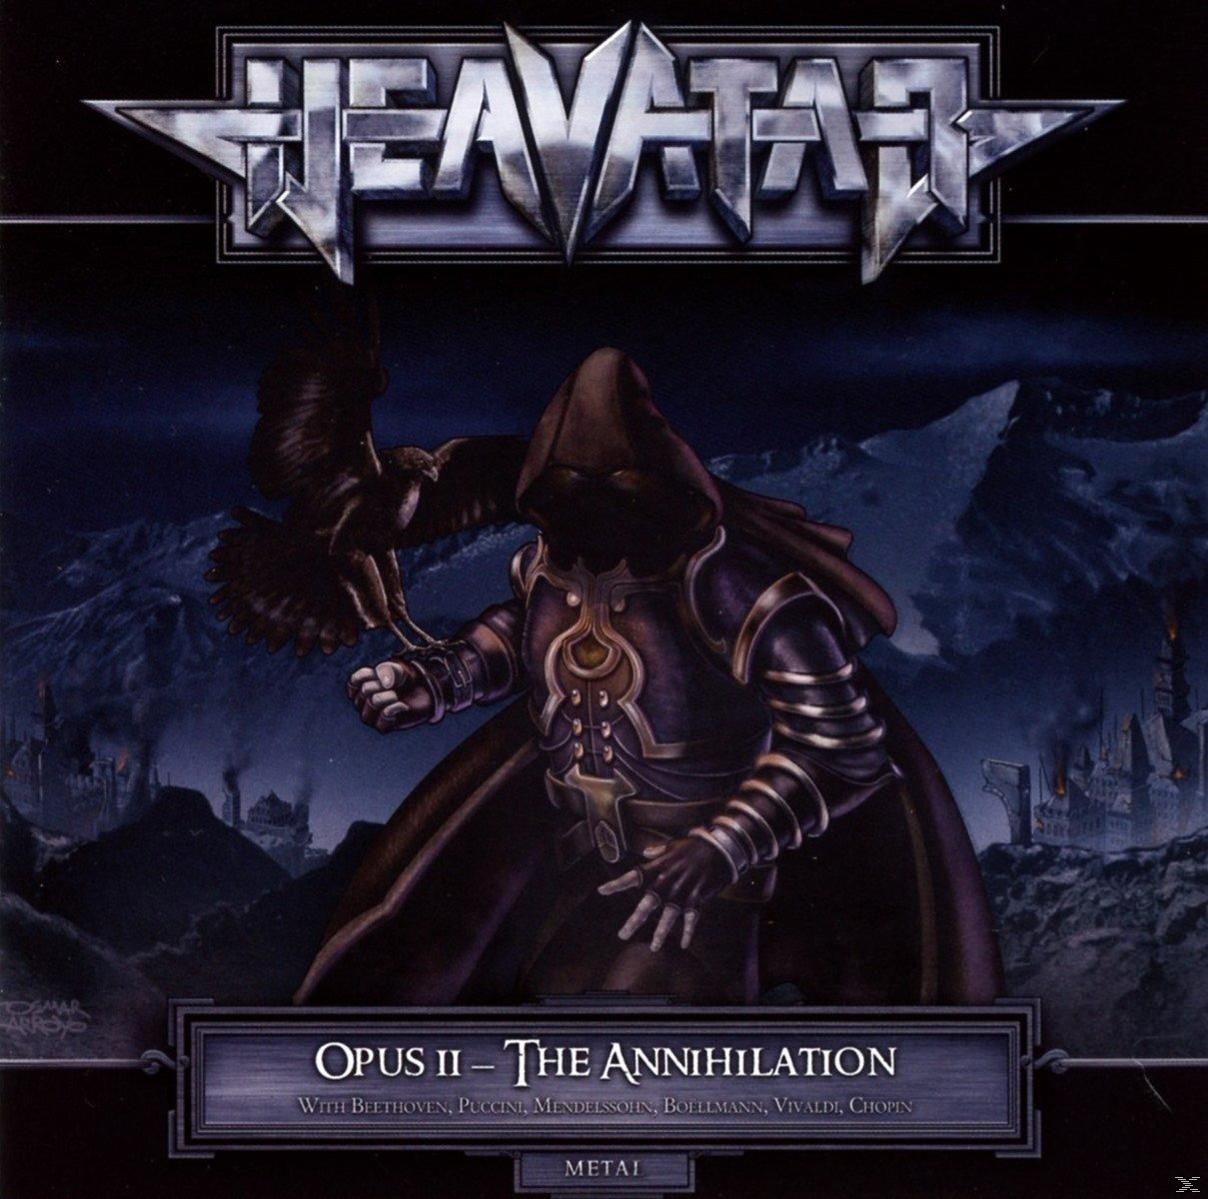 (CD) Annihilation - Opus II-The Heavatar -